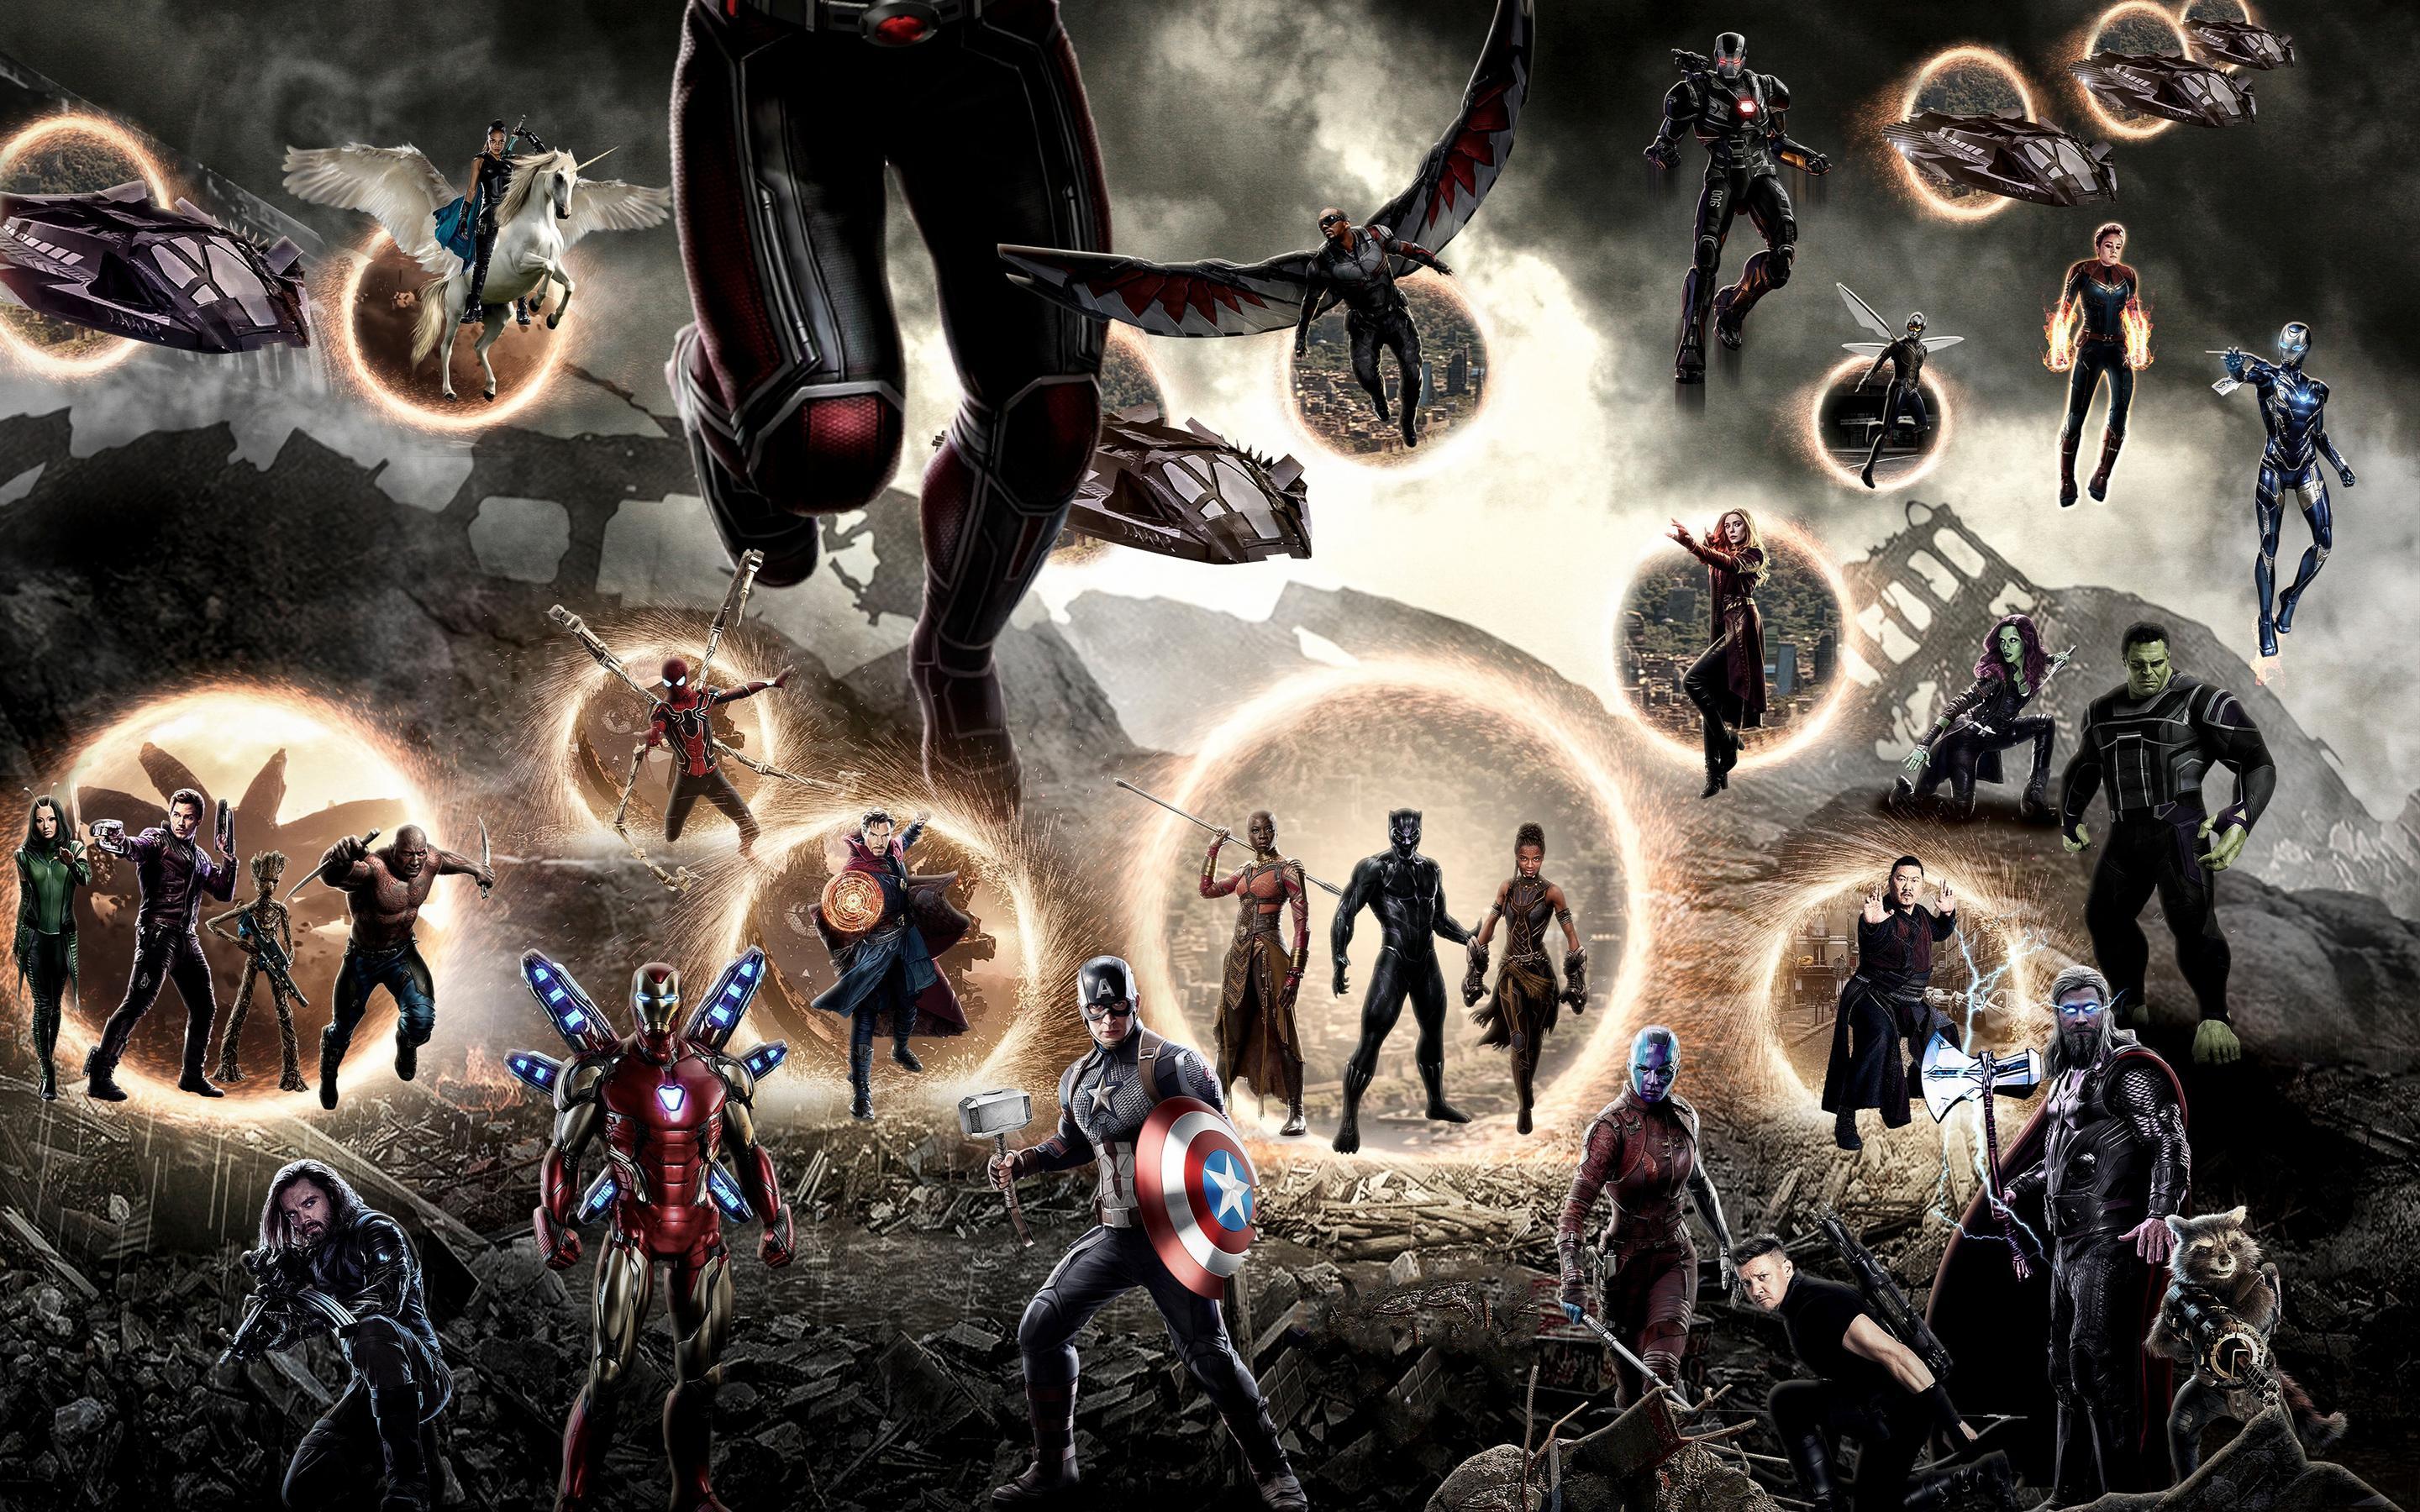  Avengers  Endgame  Final Battle  Wallpapers Wallpaper Cave